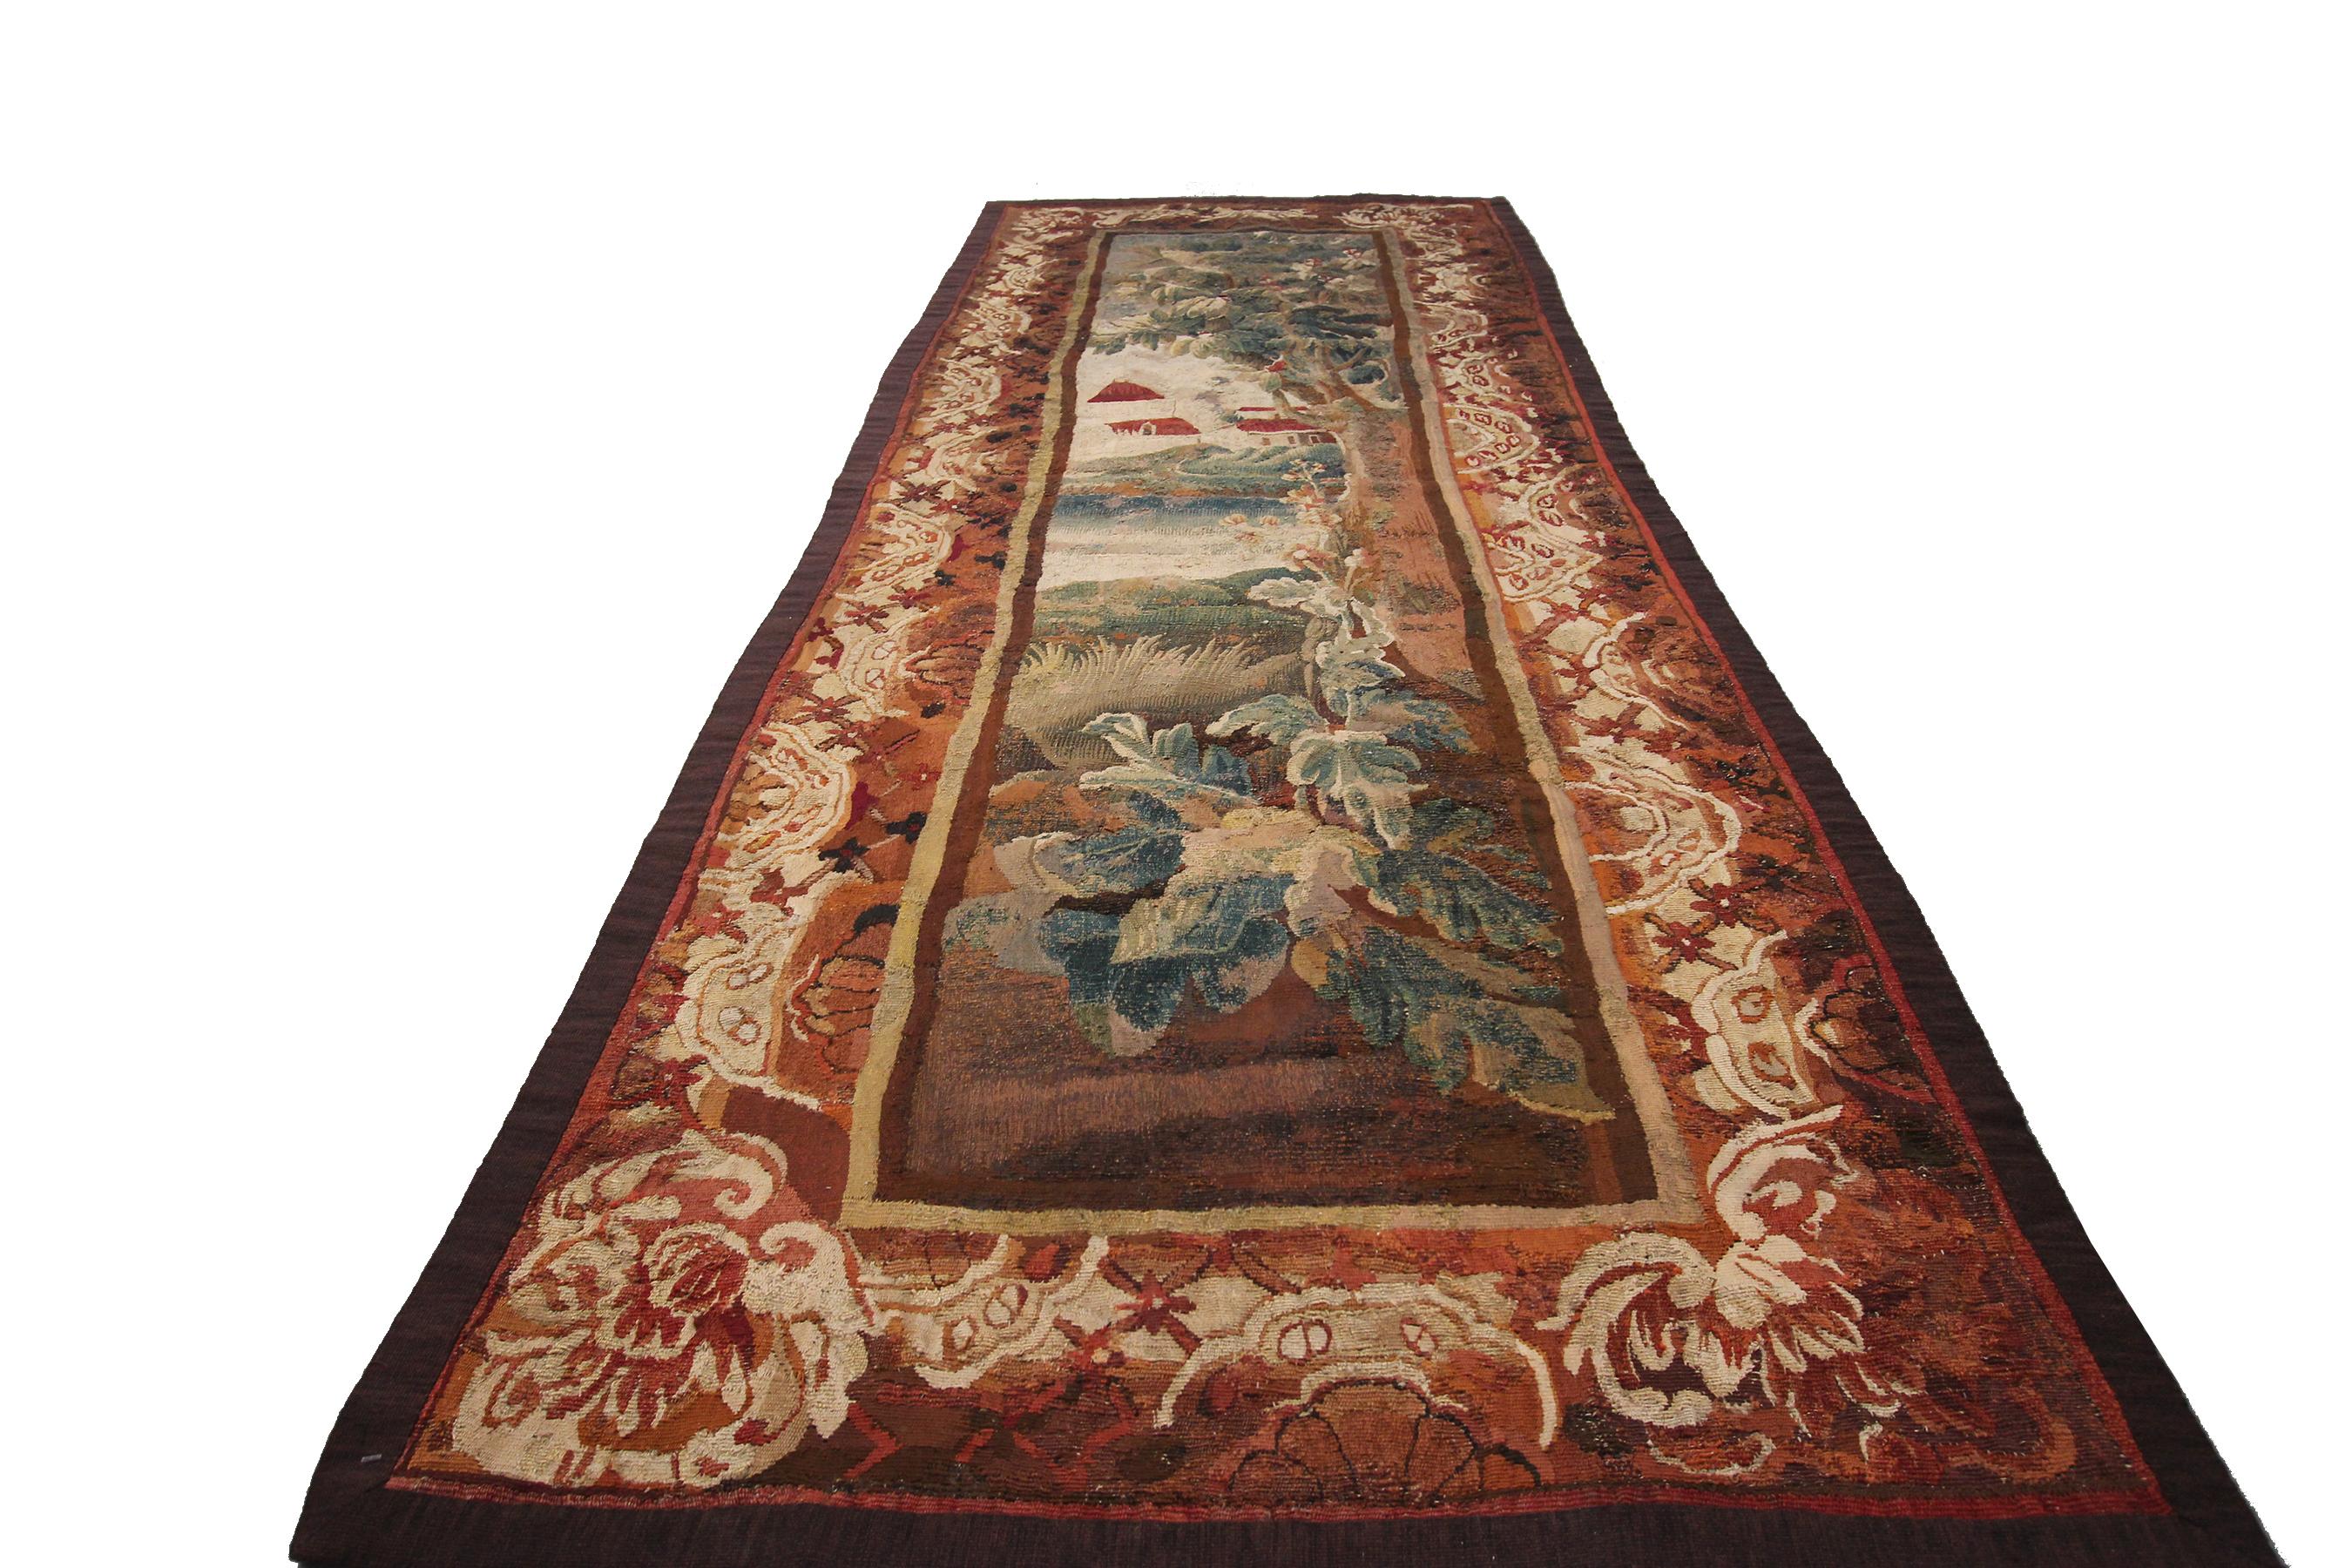 Rare 18th century Tapestry handwoven Wool & Silk Flemish Tapestry 4x9. 

102cm x 265cm

